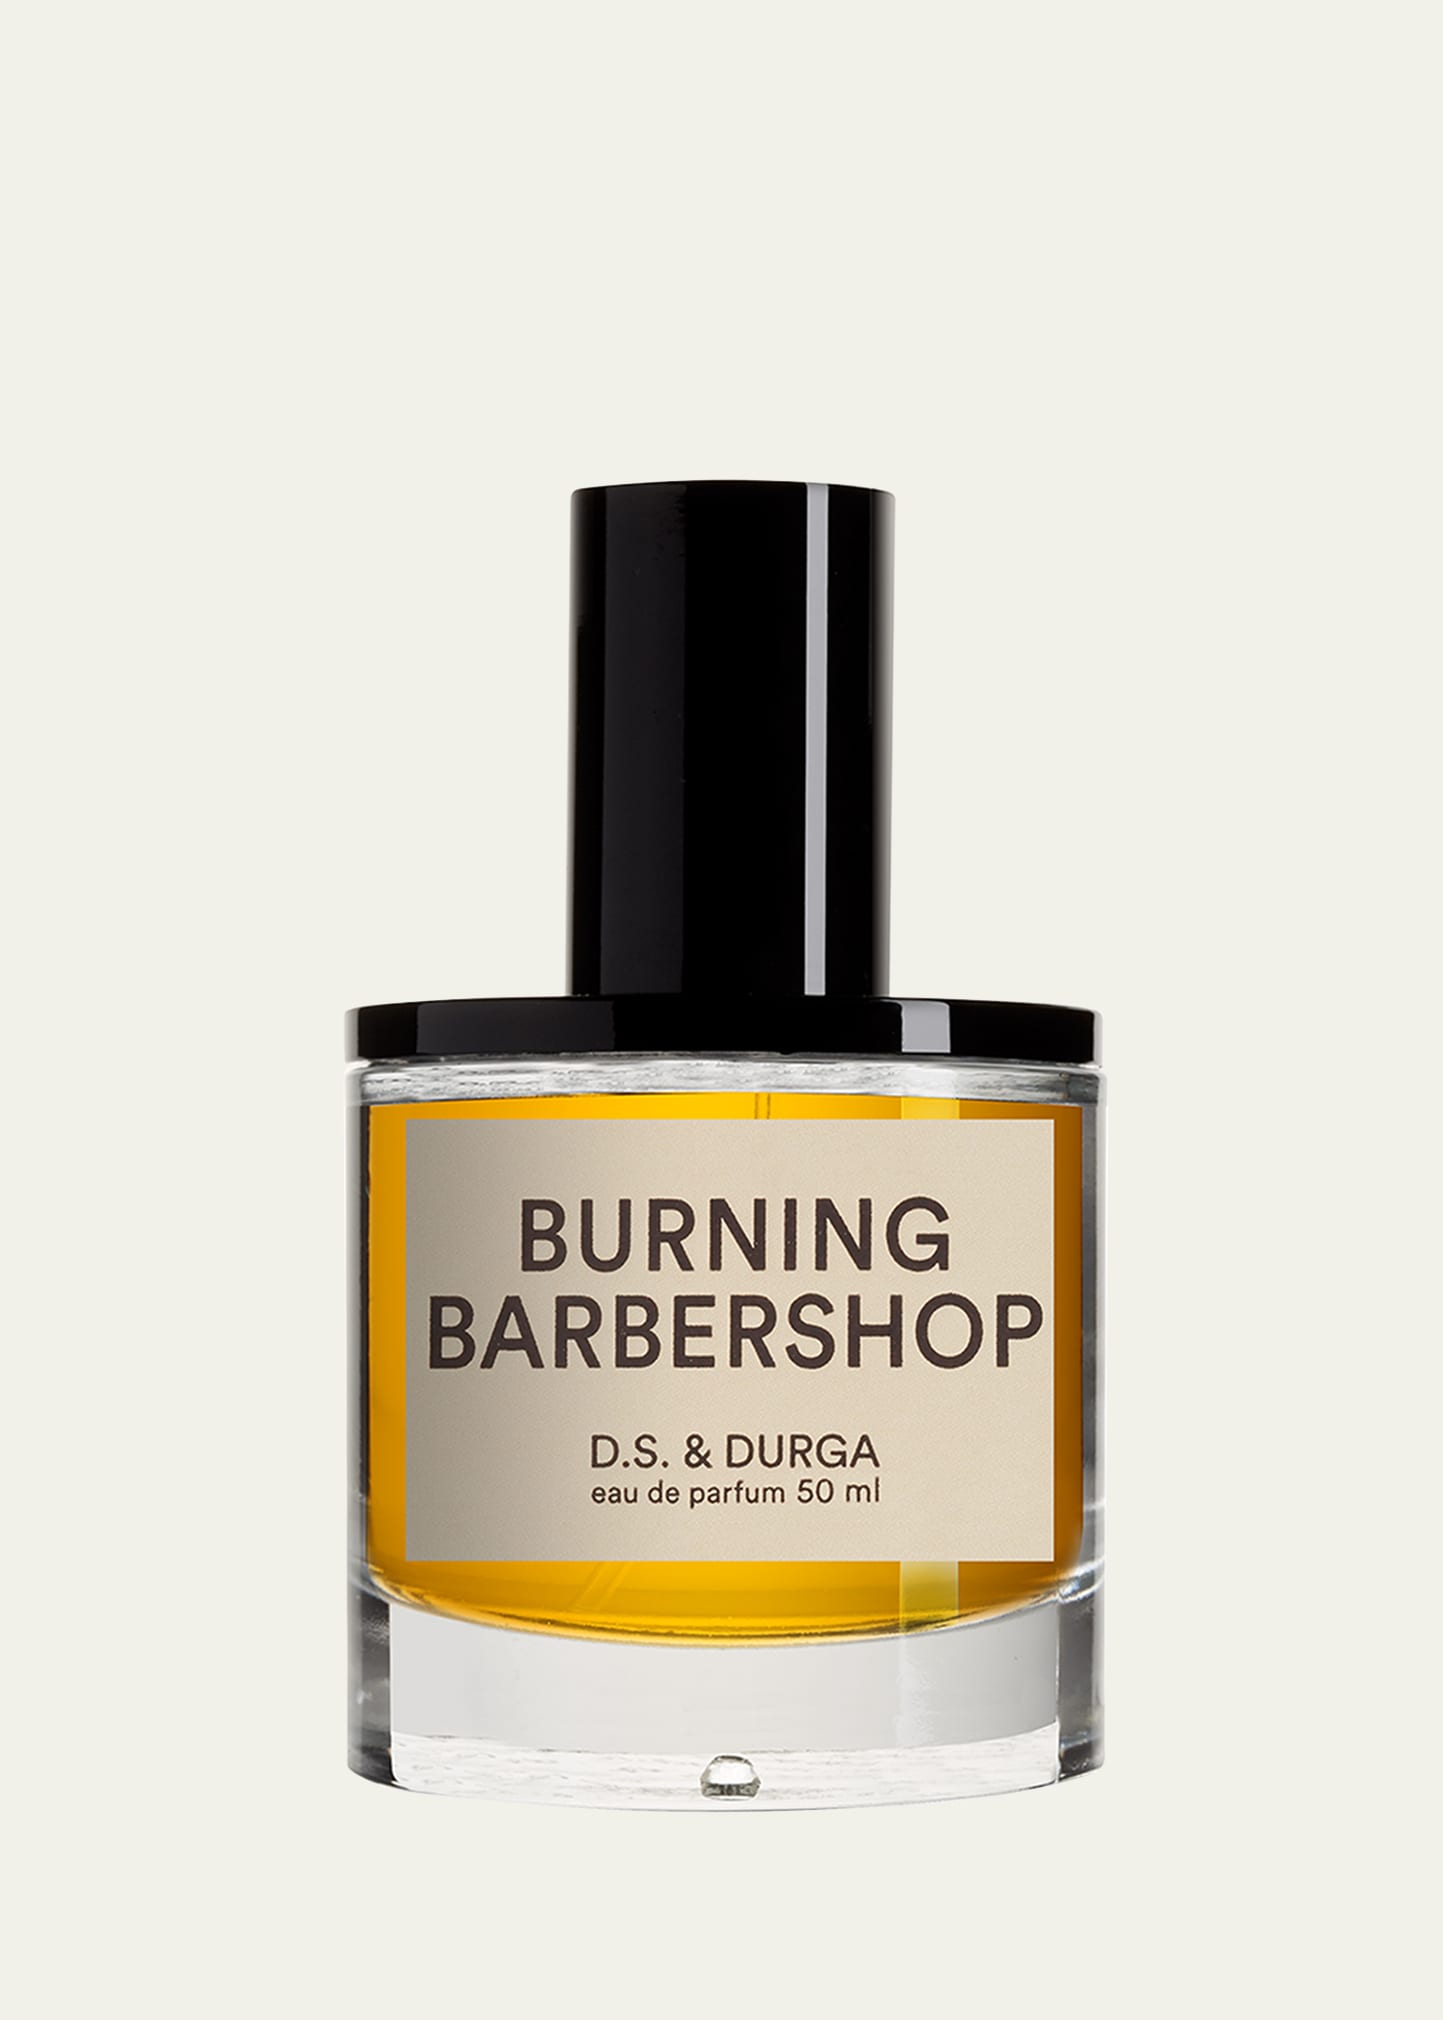 D.S. & DURGA Burning Barbershop Eau de Parfum, 1.7 oz.